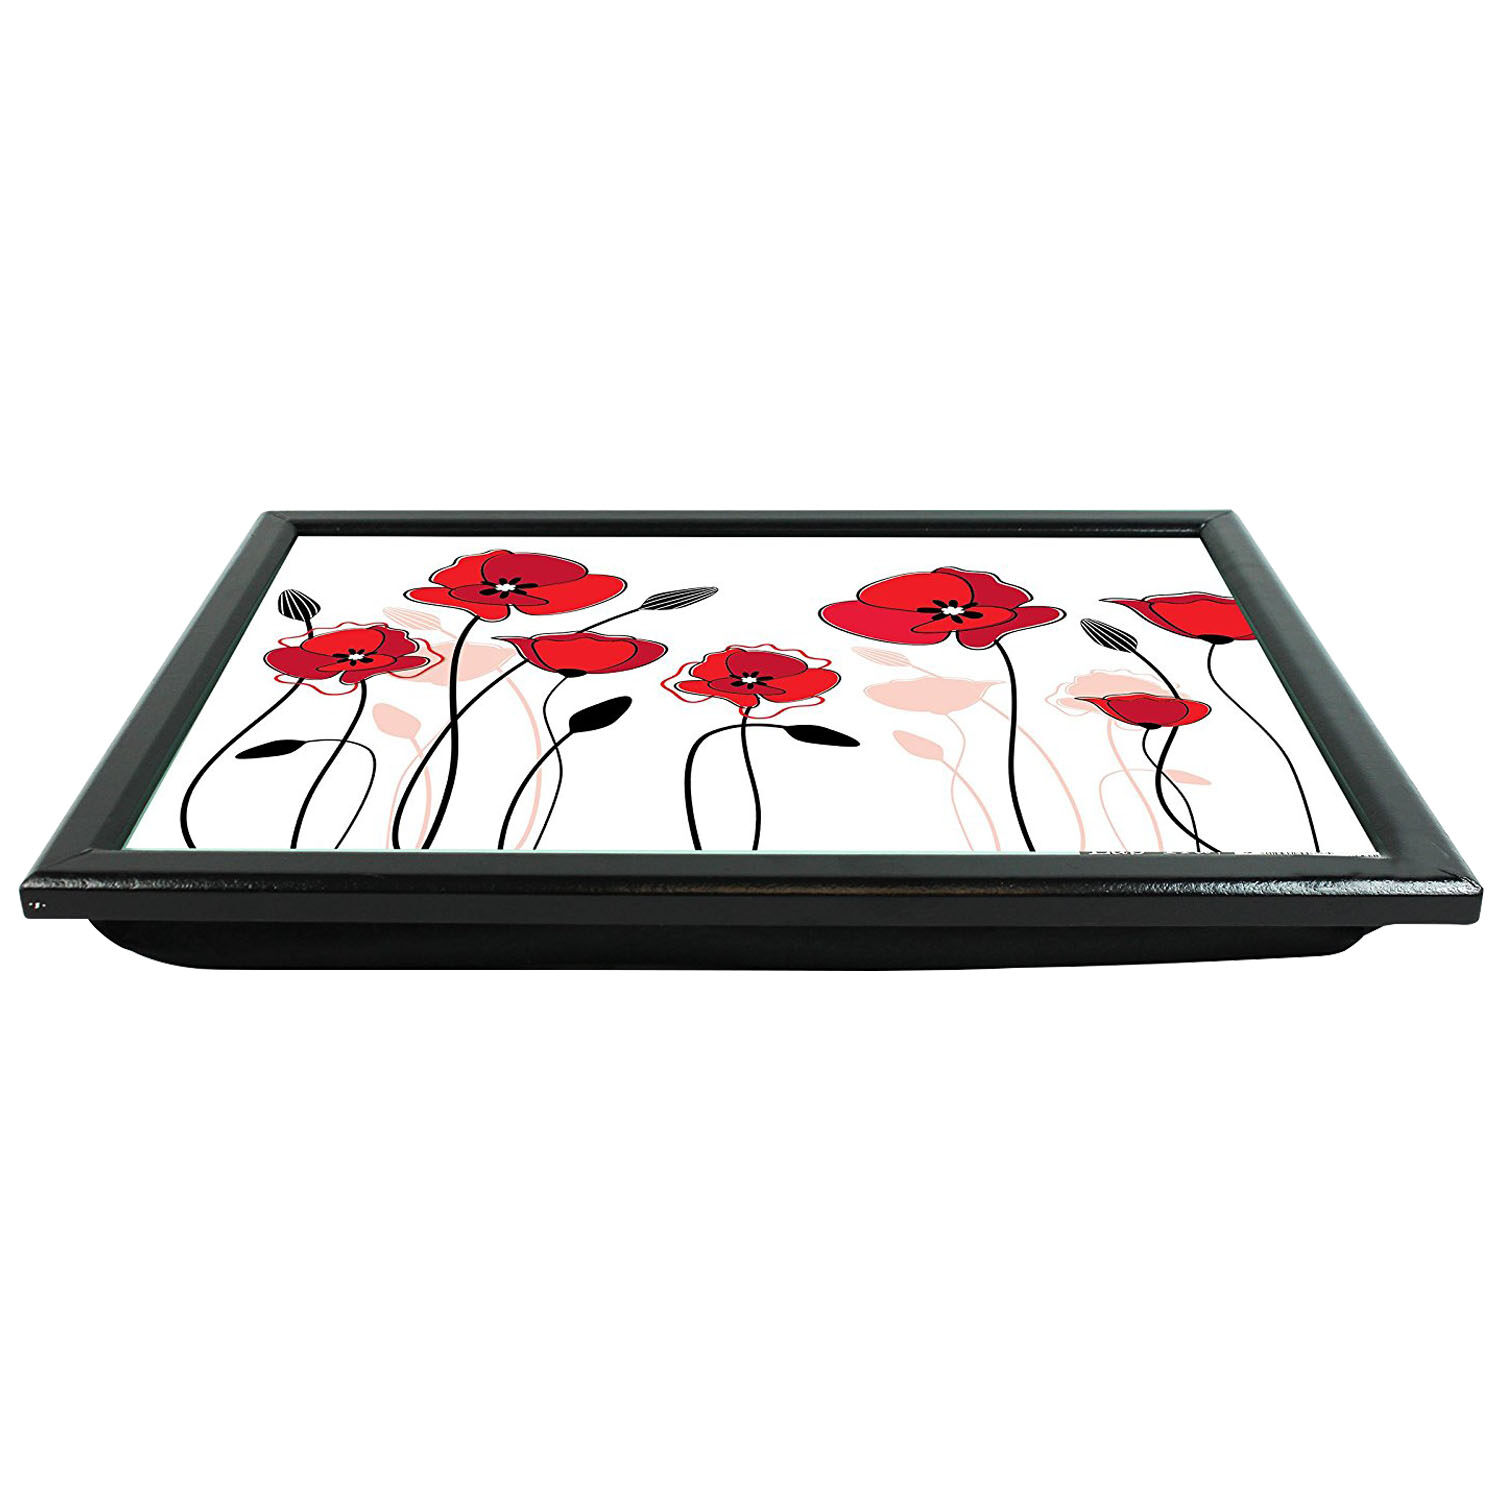 High-Quality Lap Tray with Ergonomic Design